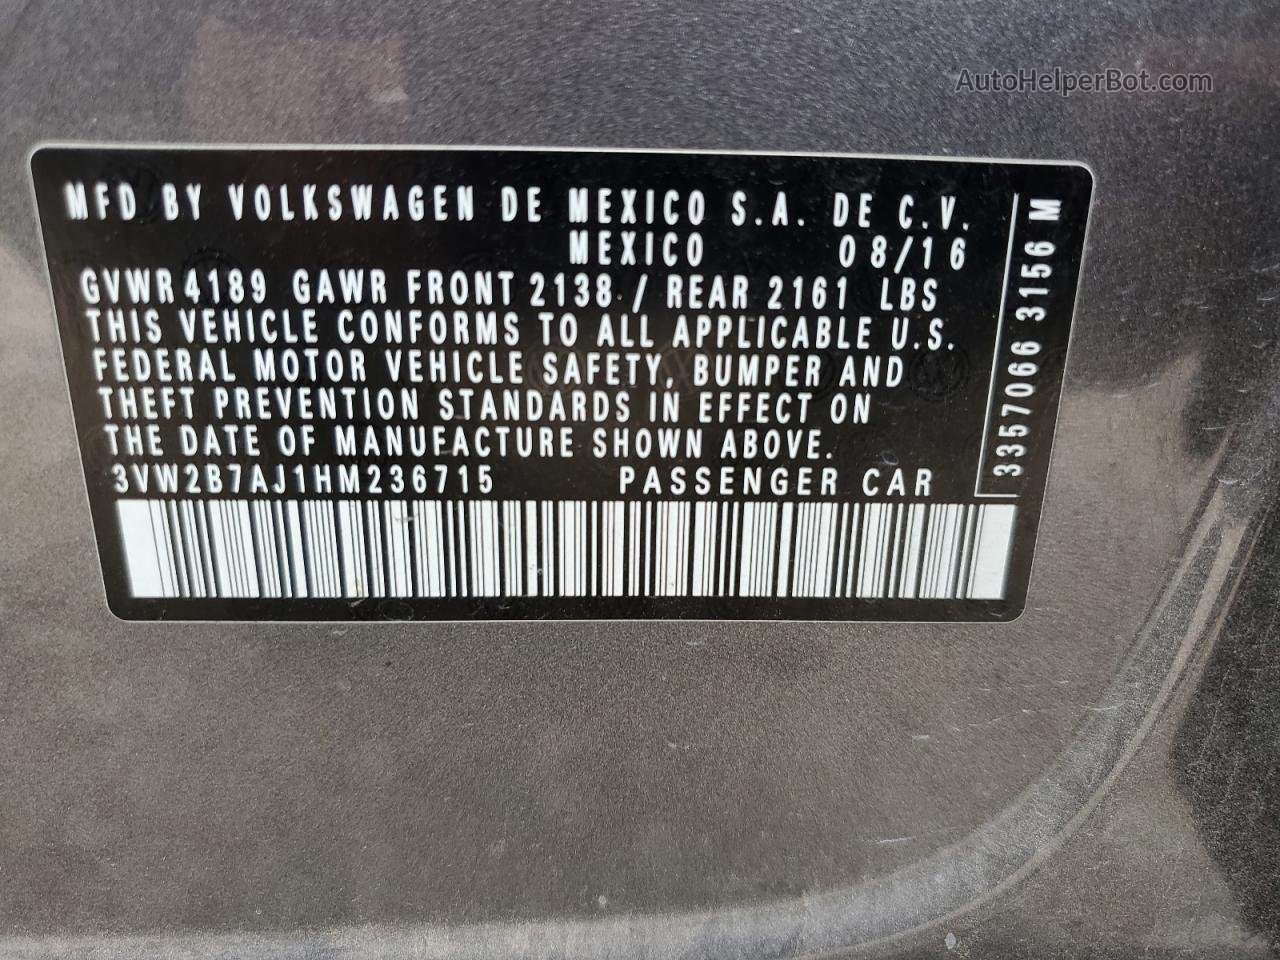 2017 Volkswagen Jetta S Gray vin: 3VW2B7AJ1HM236715